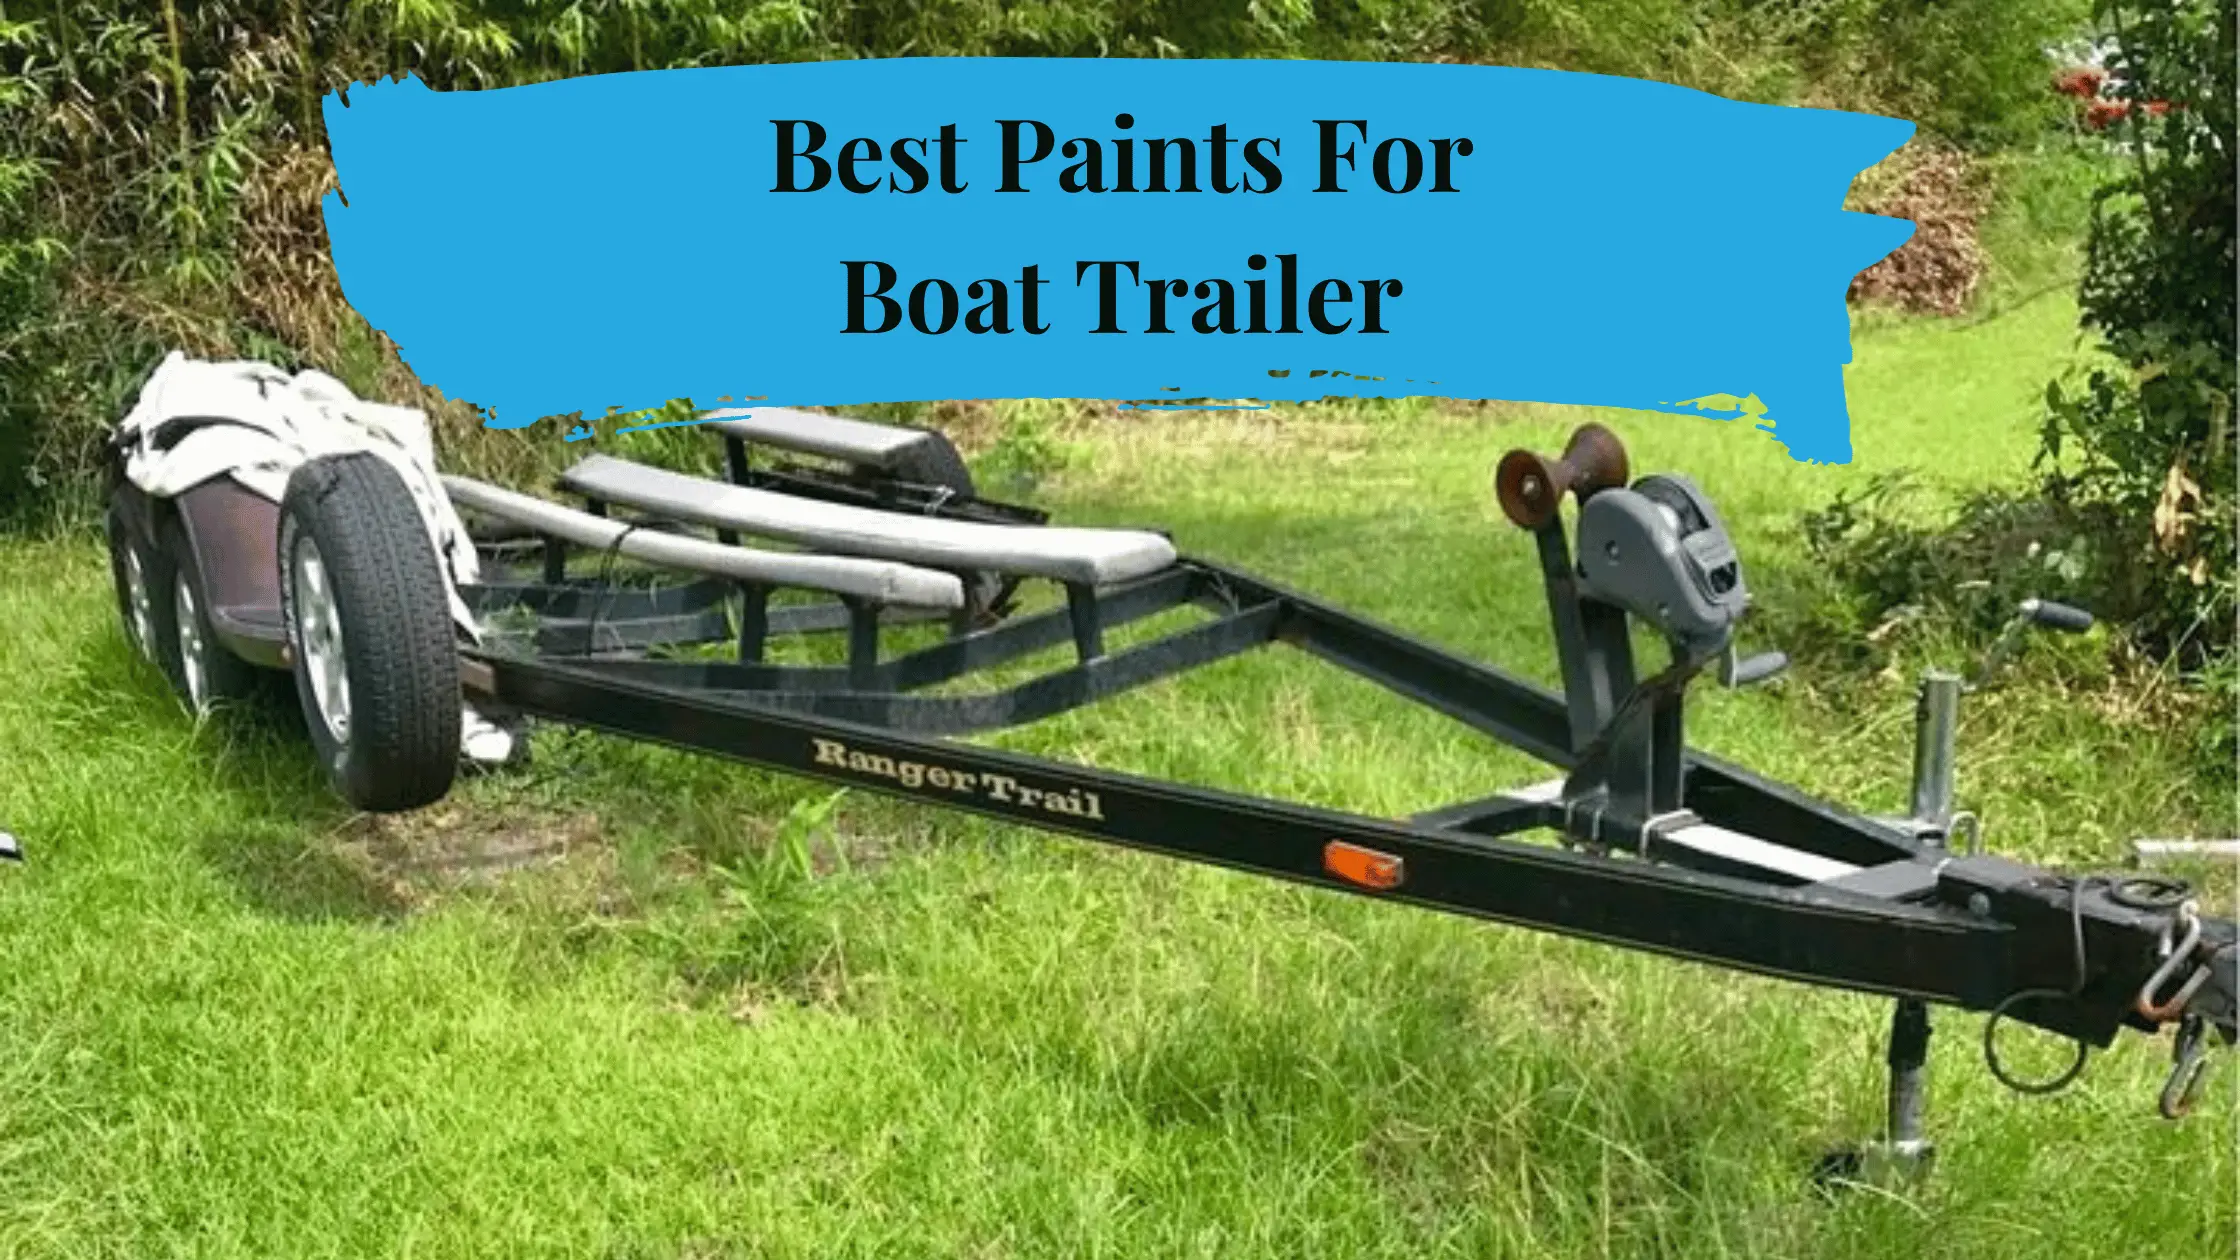 Best Paints For Boat Trailer